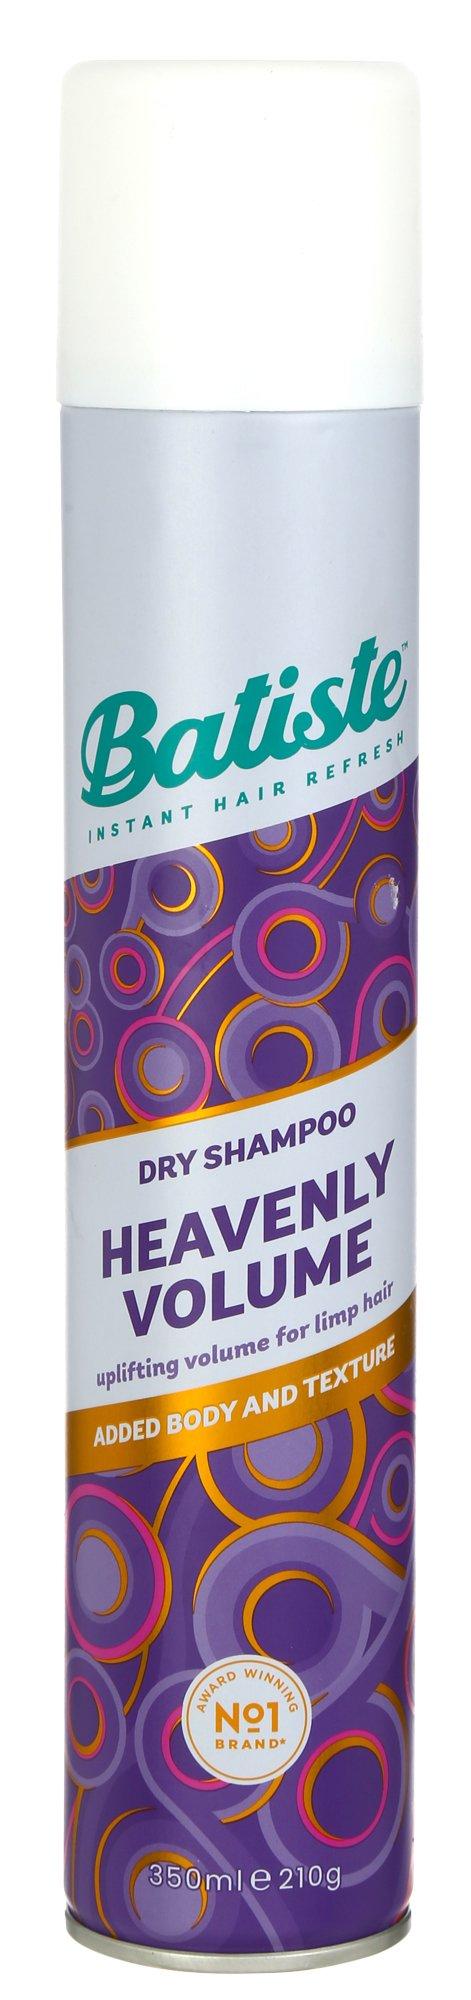 11 oz heavenly Volume Dry Shampoo